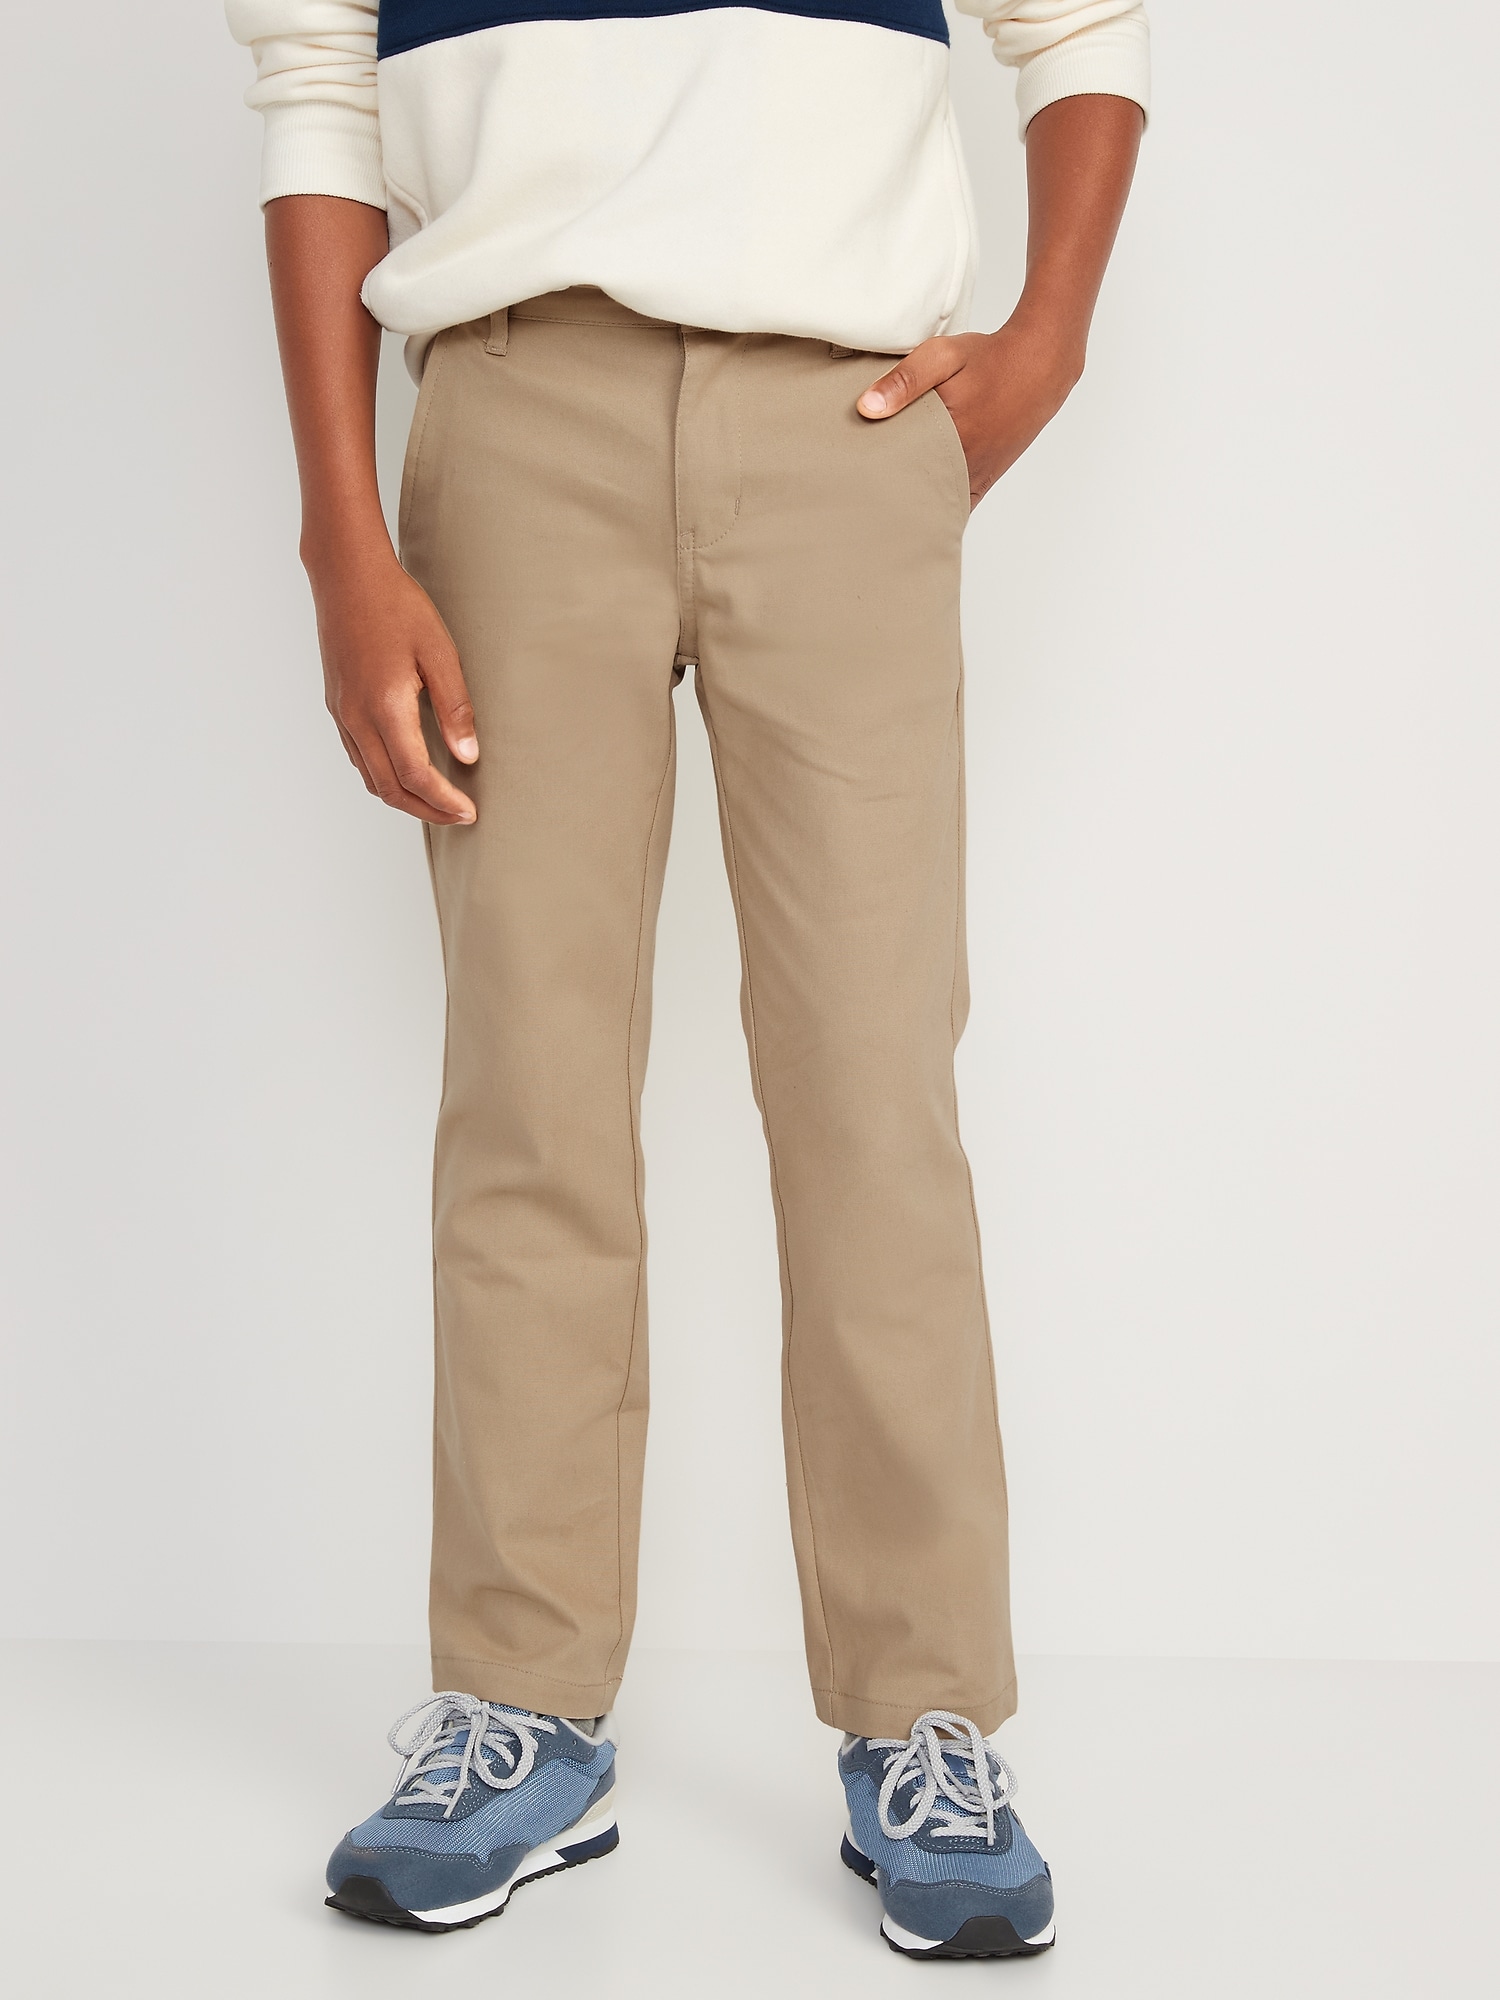 NWTs Boys Old Navy uniform pants sz 12 Slim Skinny Built In Flex Reinforced  Knee  eBay